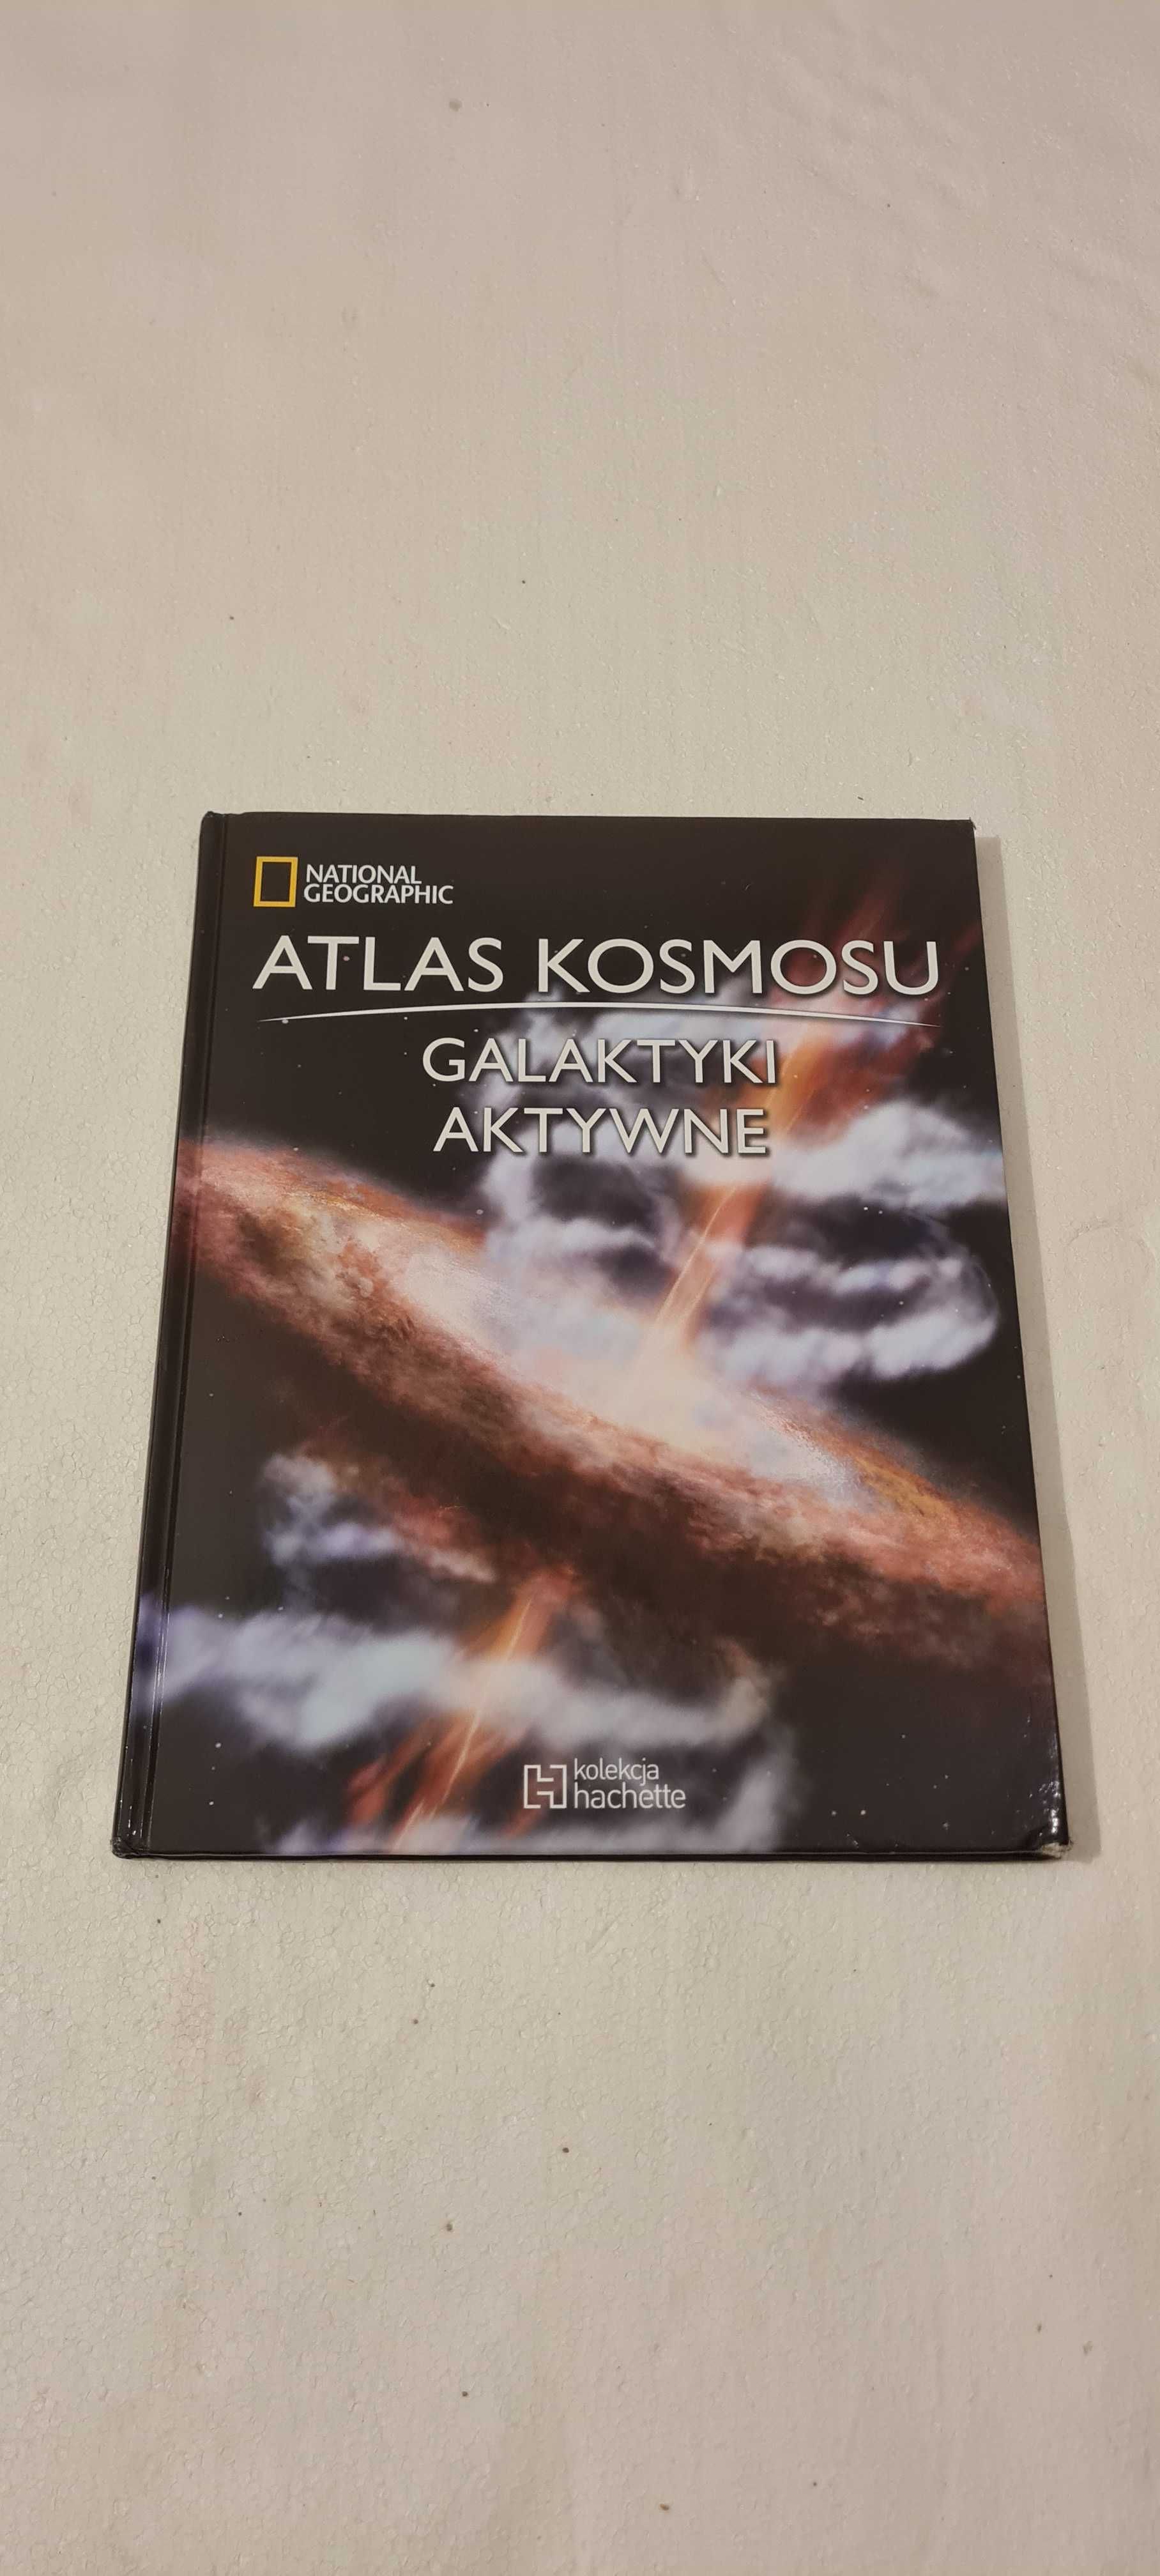 Atlas Kosmosu National Geographic Galaktyki